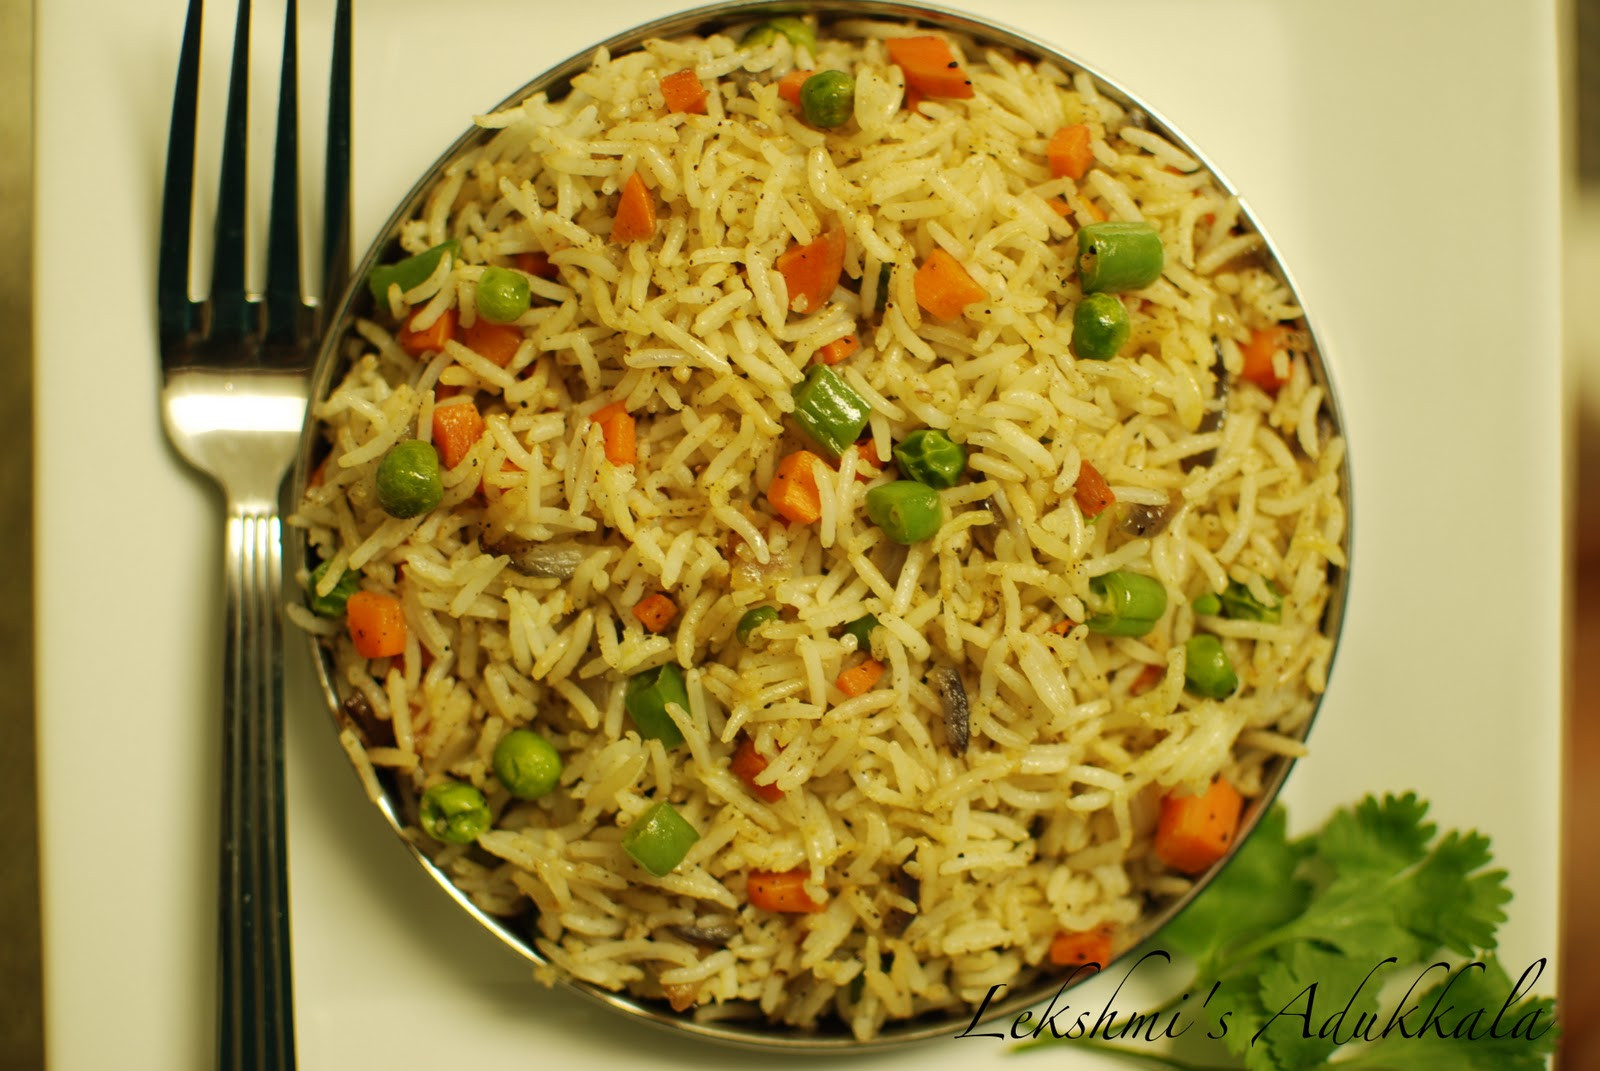 Fried Rice Vegetarian
 Lekshmi s Adukkala Ve able Fried Rice